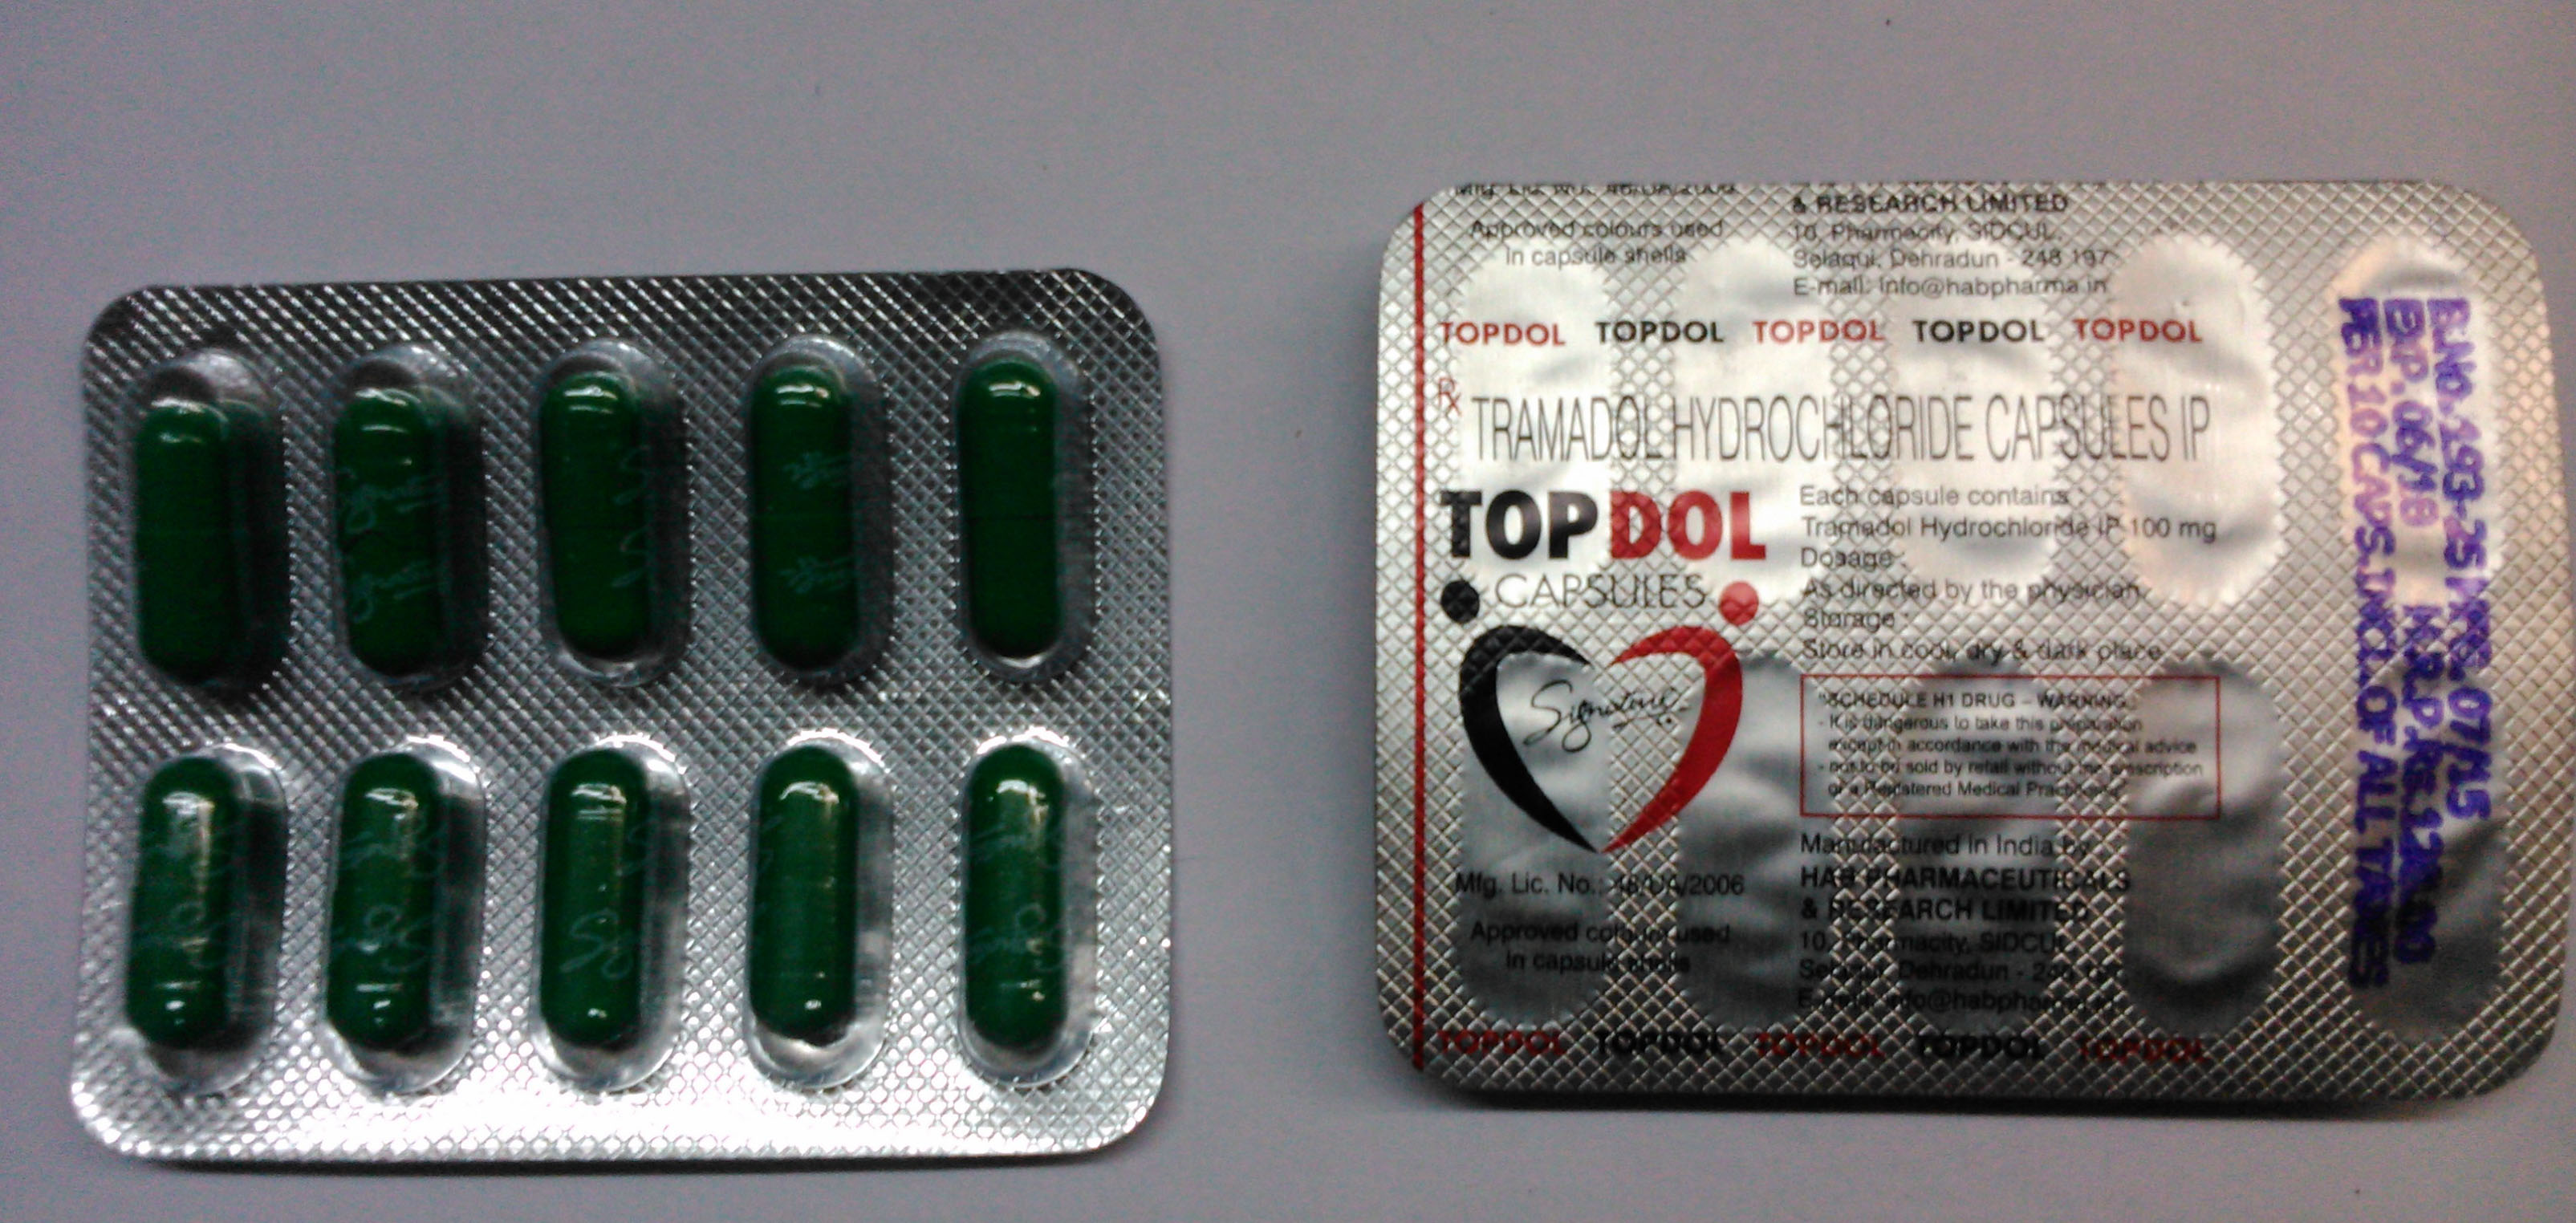 (generic Ultram) Tramadol 100 mg capsules for acute pain relief.